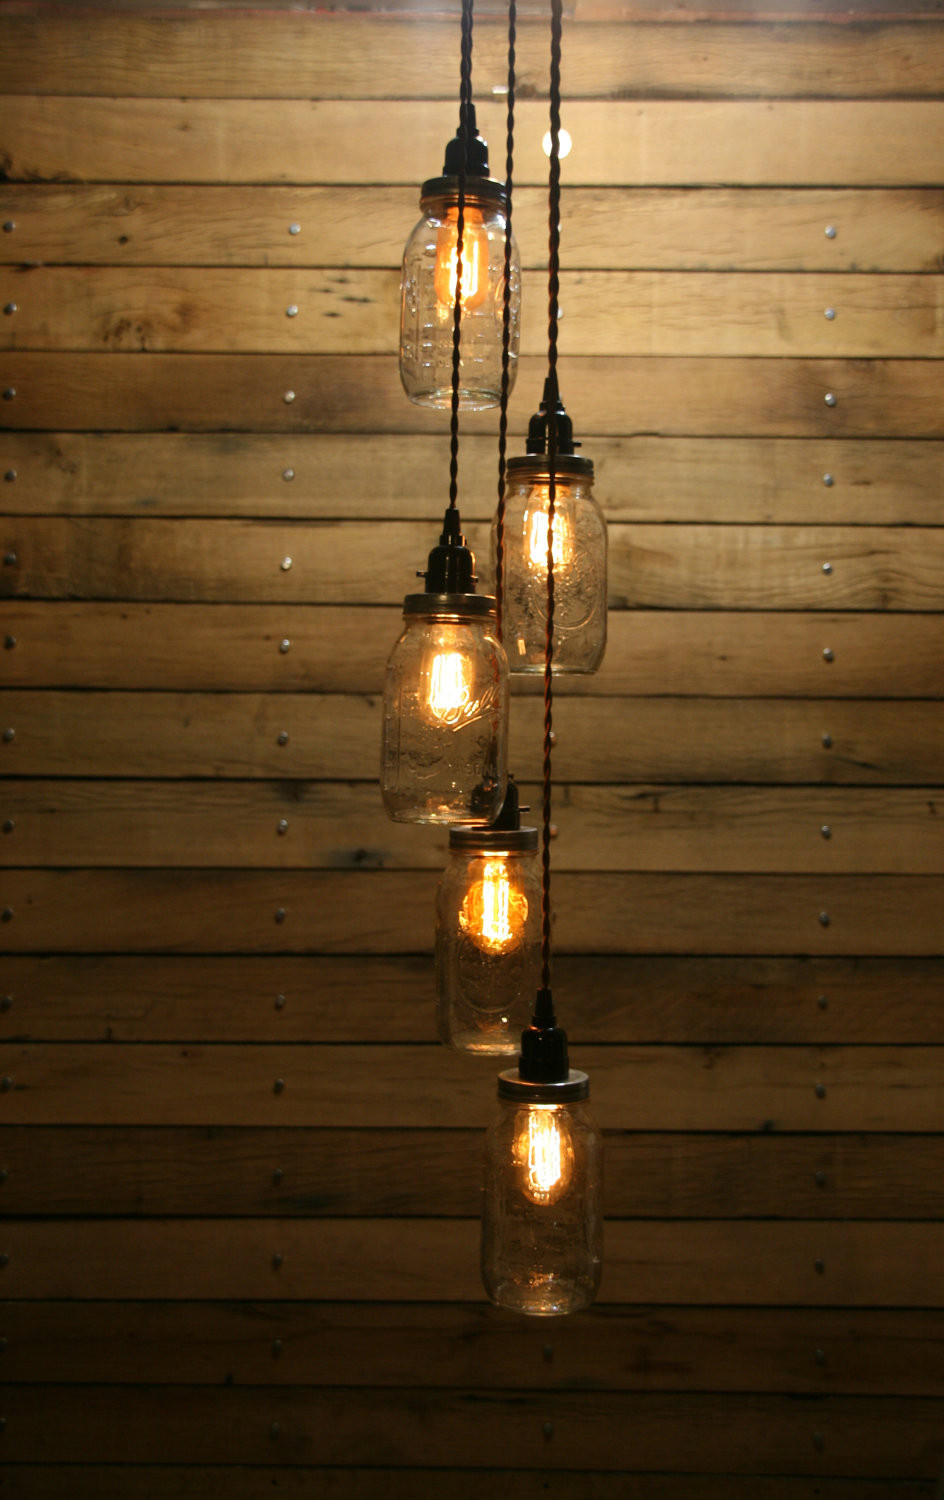 Best ideas about DIY Lighting Kit
. Save or Pin DIY 5 Jar Pendant Light Mason Jar Chandelier by Now.